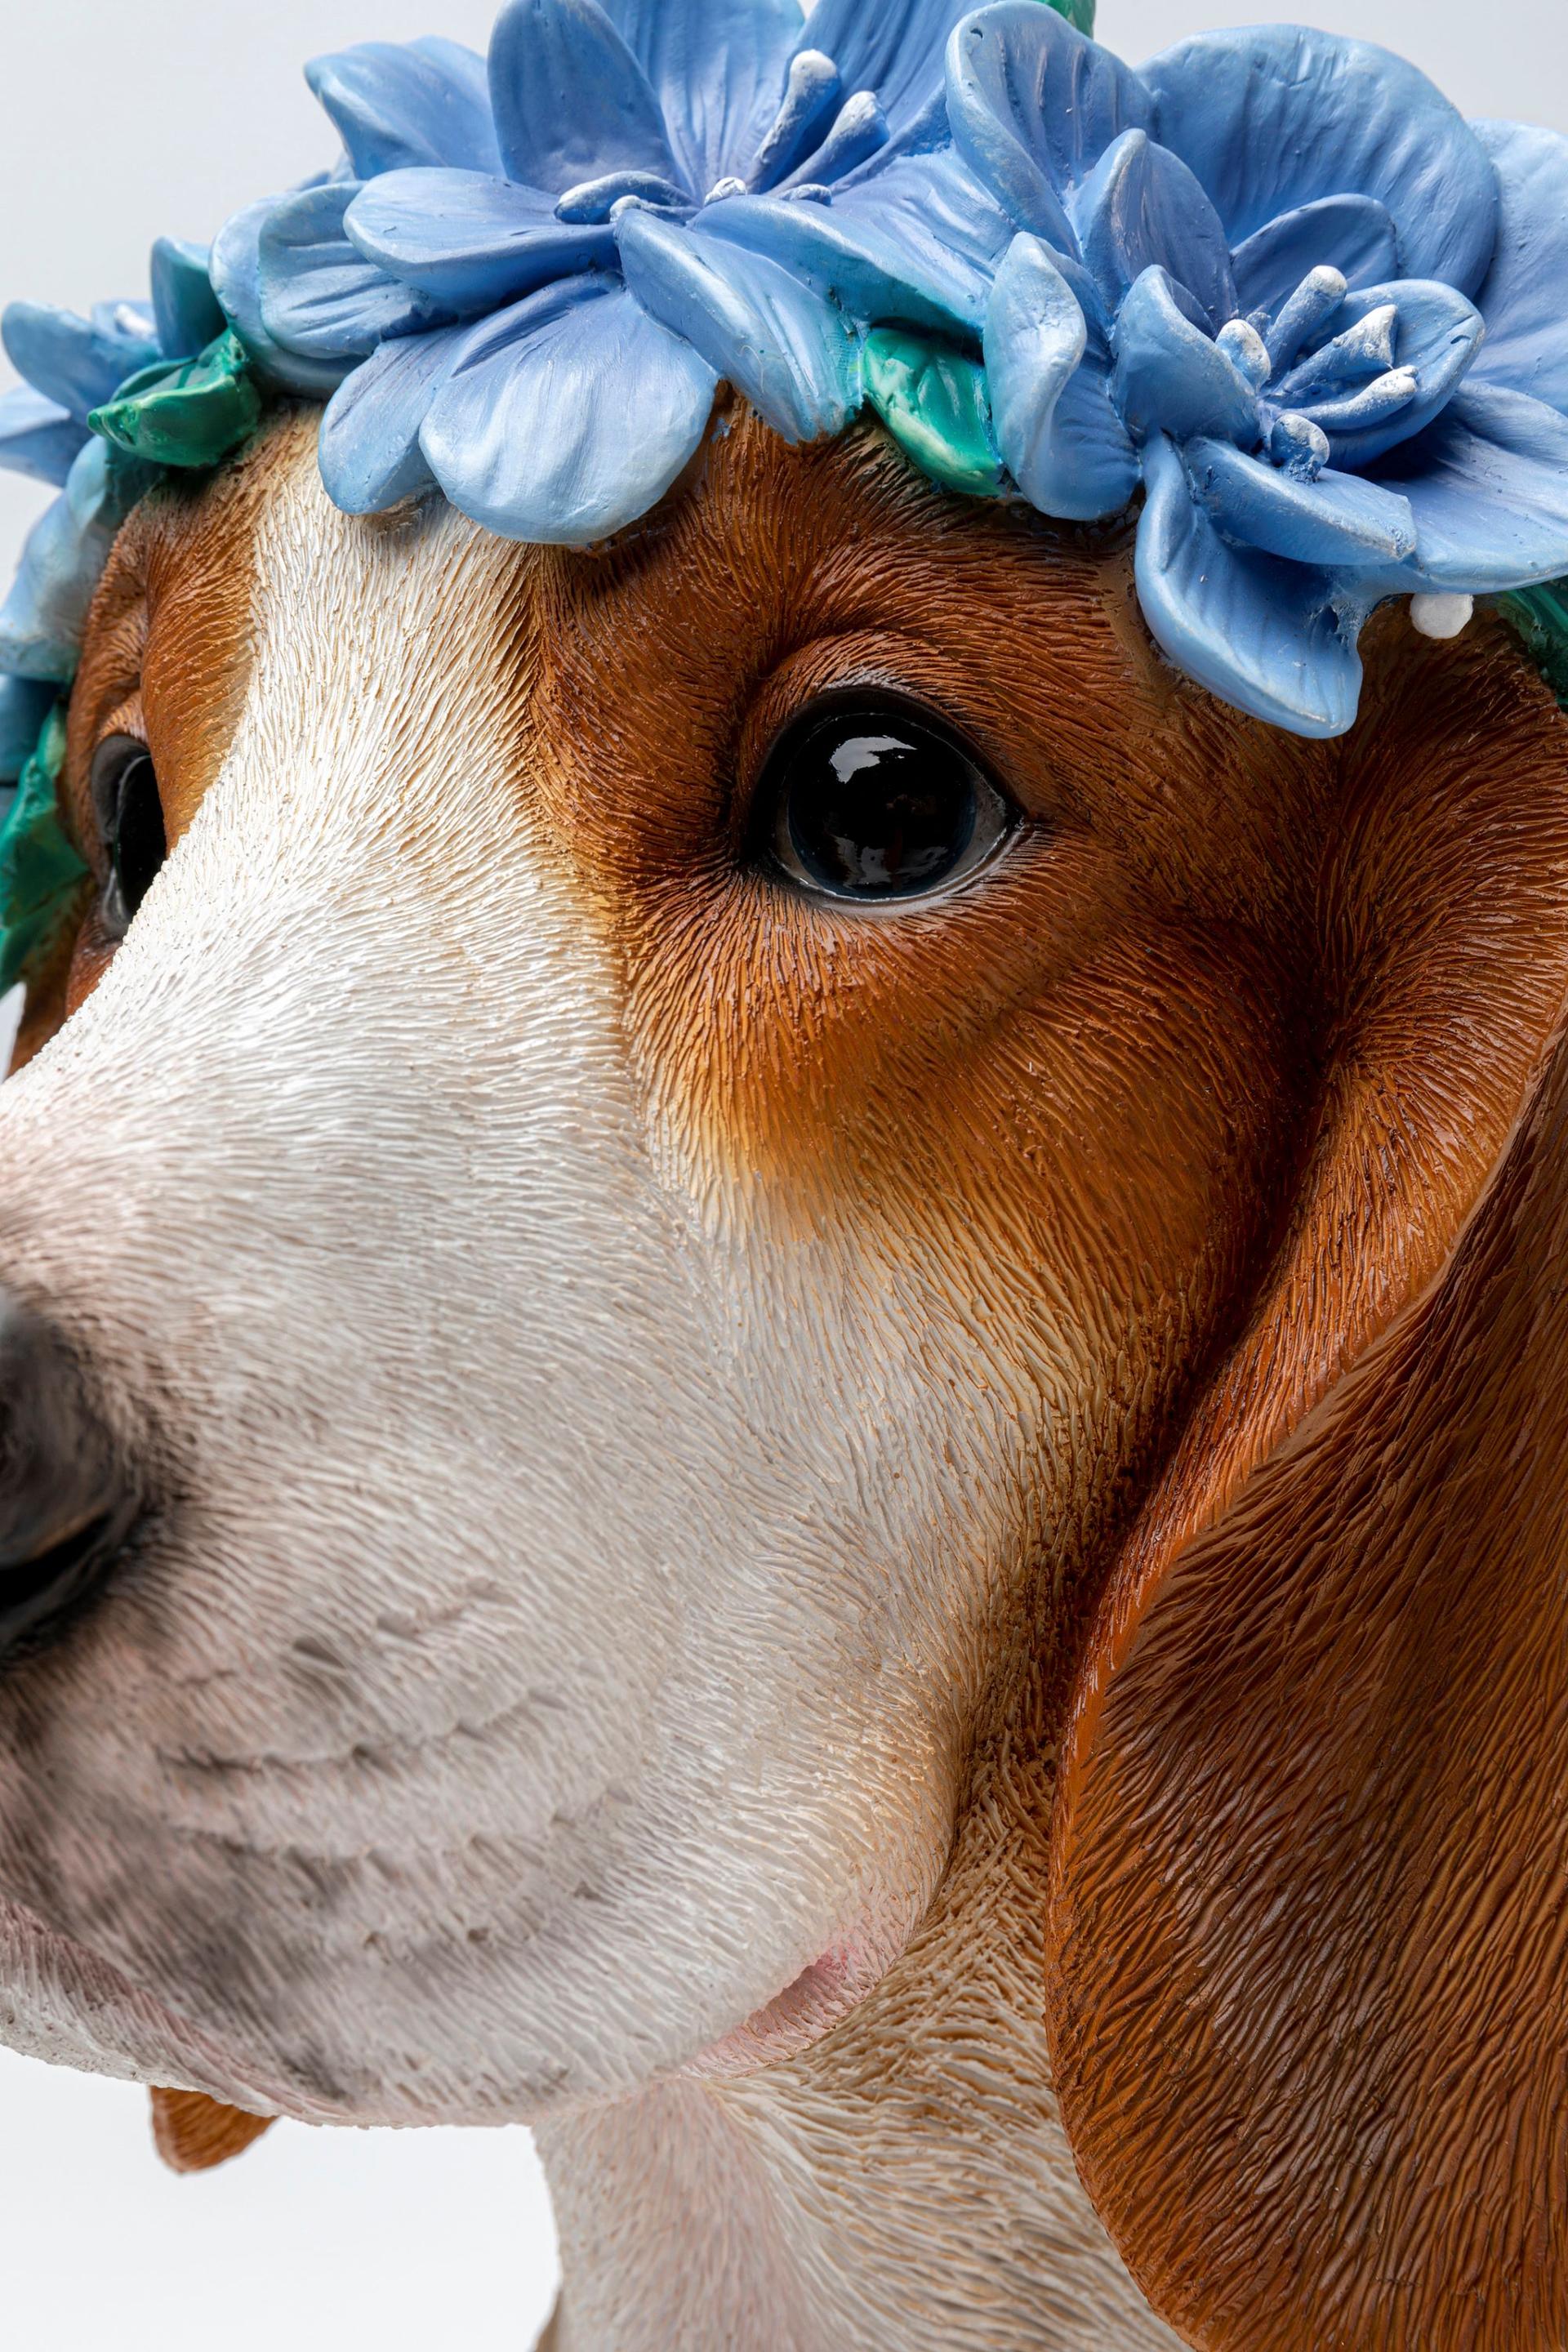 Flower Beagle Deco Object